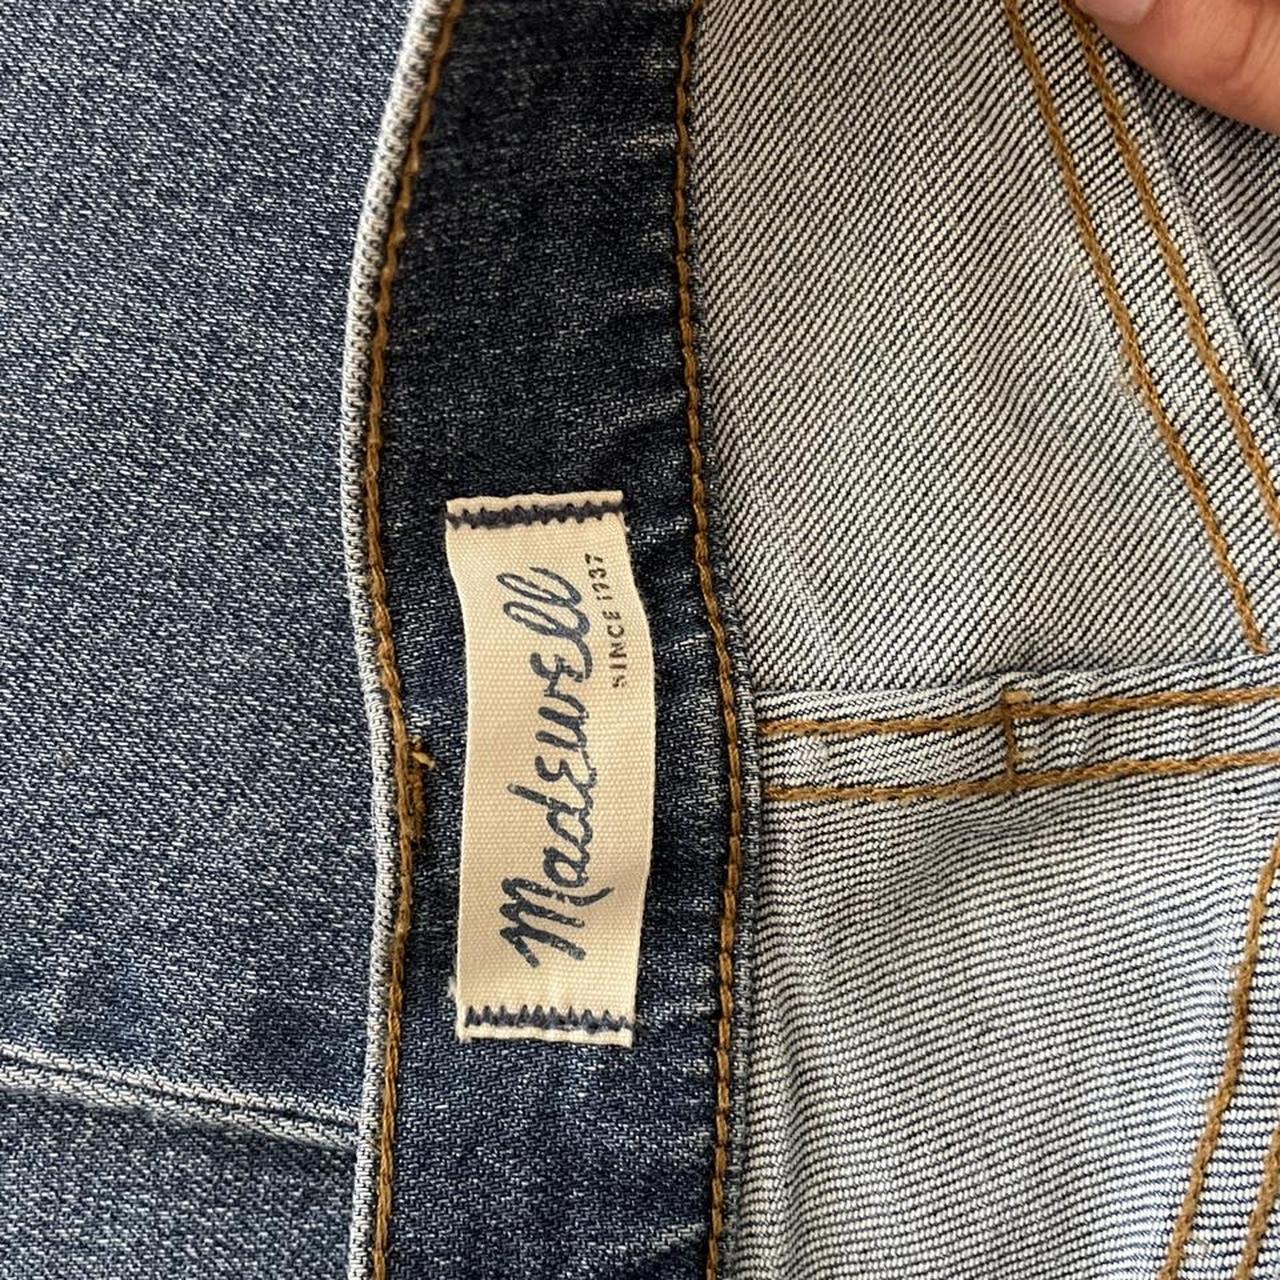 Madewell flea market flare jeans never worn - Depop